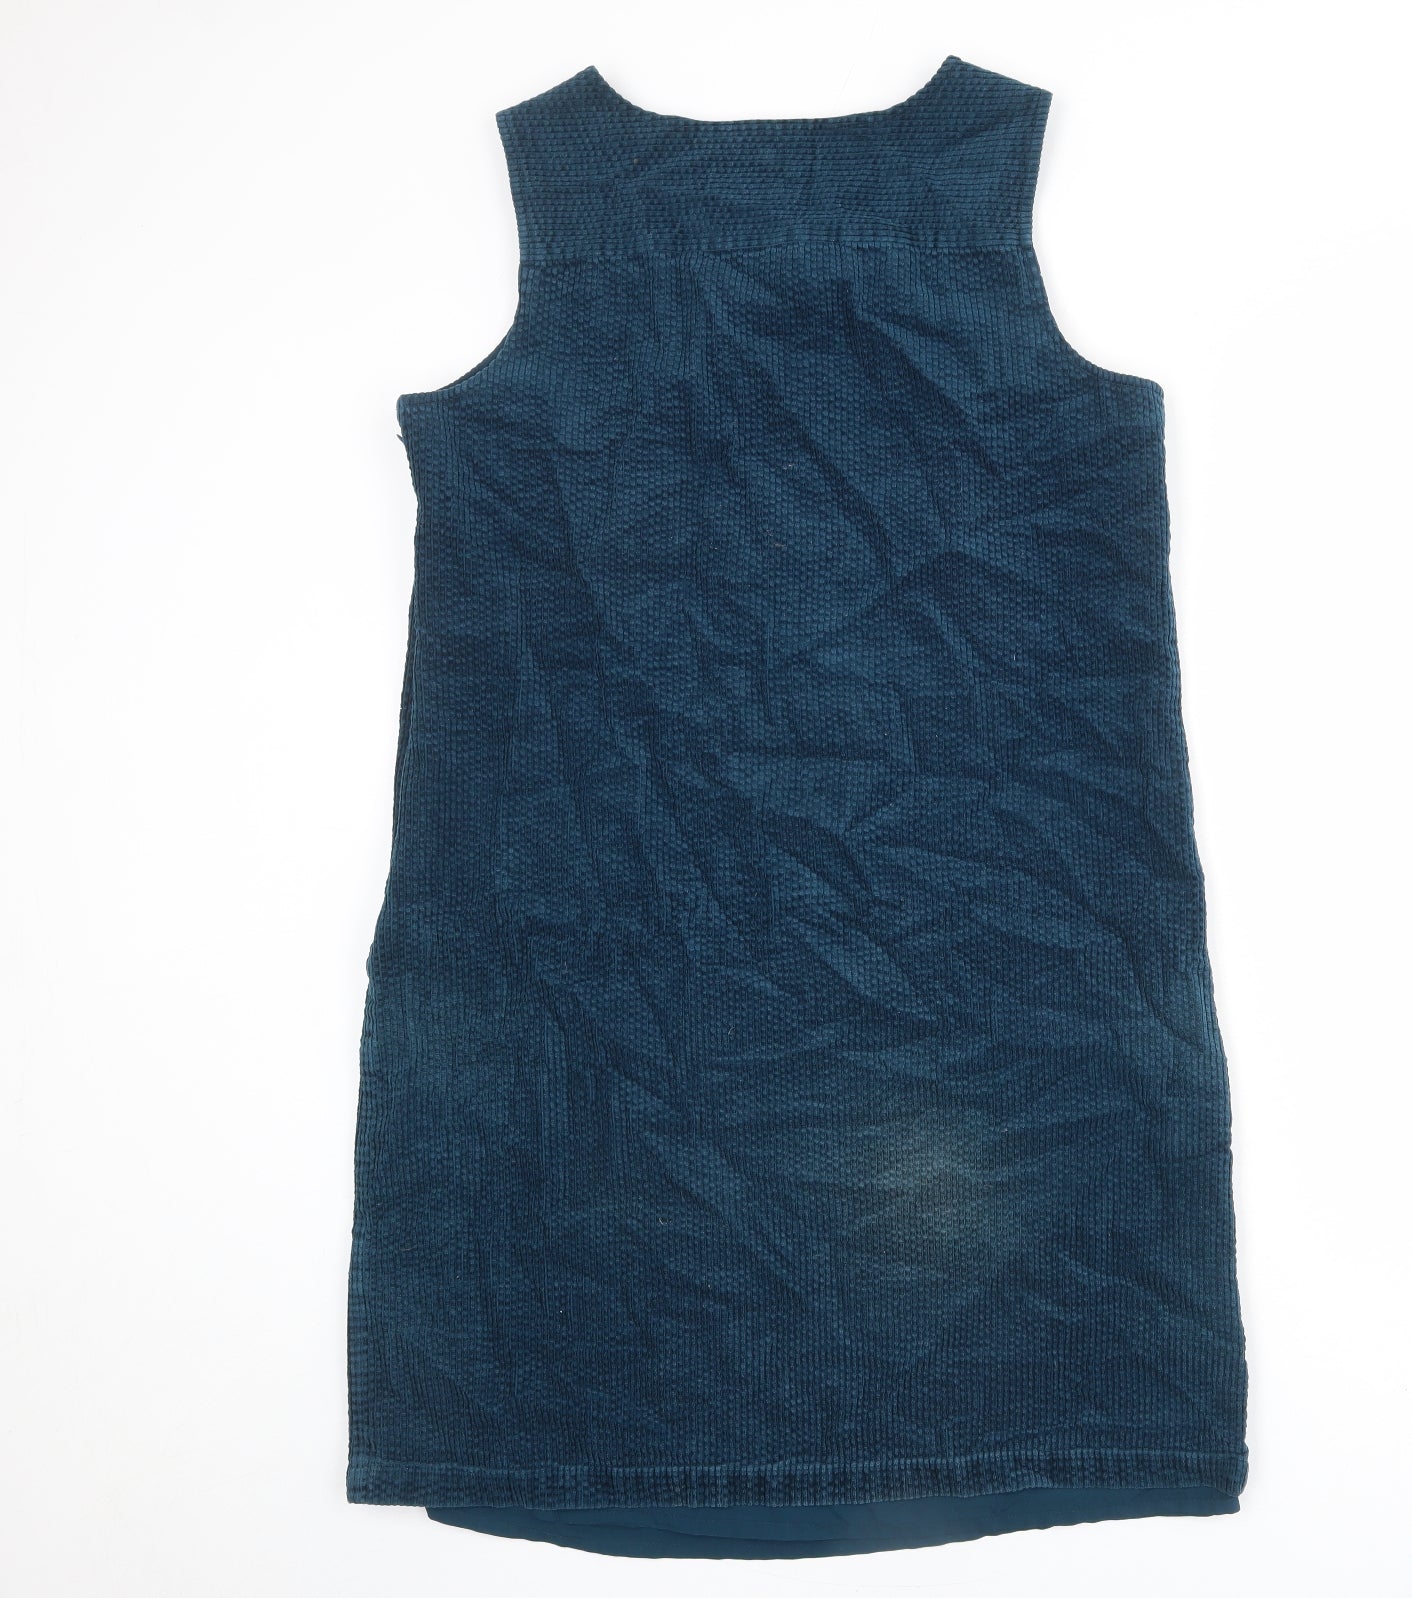 Seasalt Womens Blue Cotton Pinafore/Dungaree Dress Size 14 Round Neck Zip